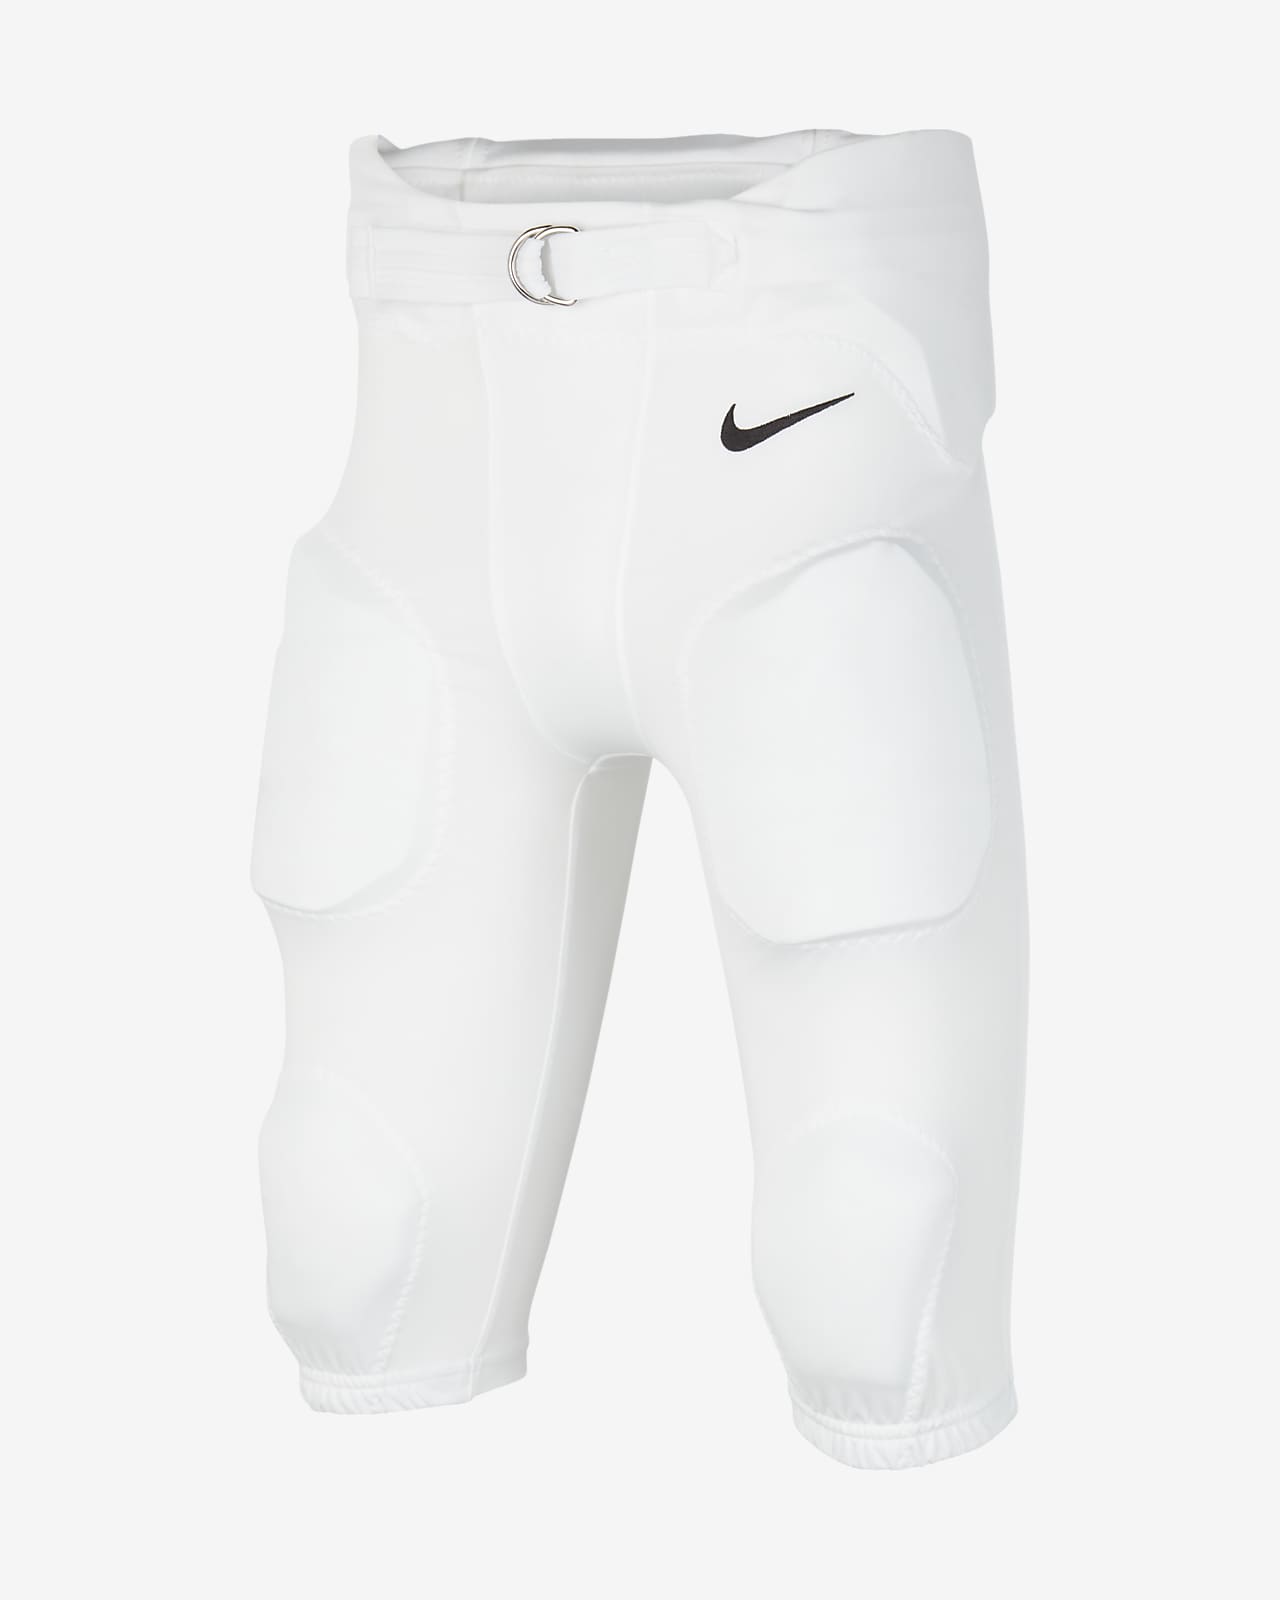 Nike Dri-FIT Academy Kids Football Pants - Black/White